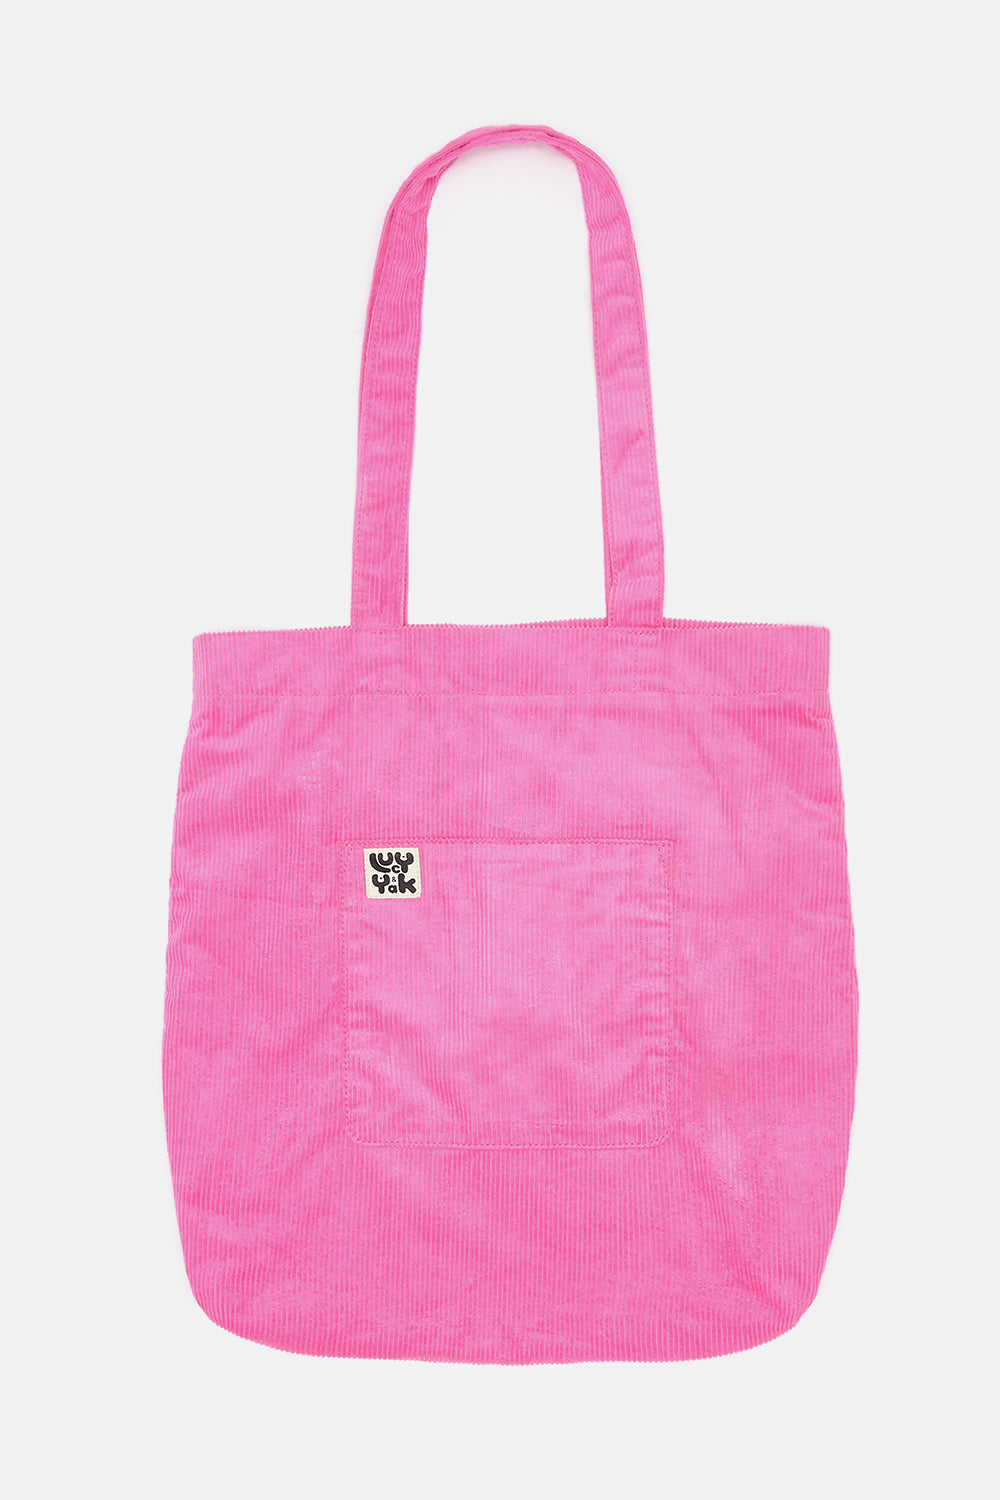 Women handles bags purses large capacity shoulder bag trendy waterproof  nylon cloth bag | Fruugo BH